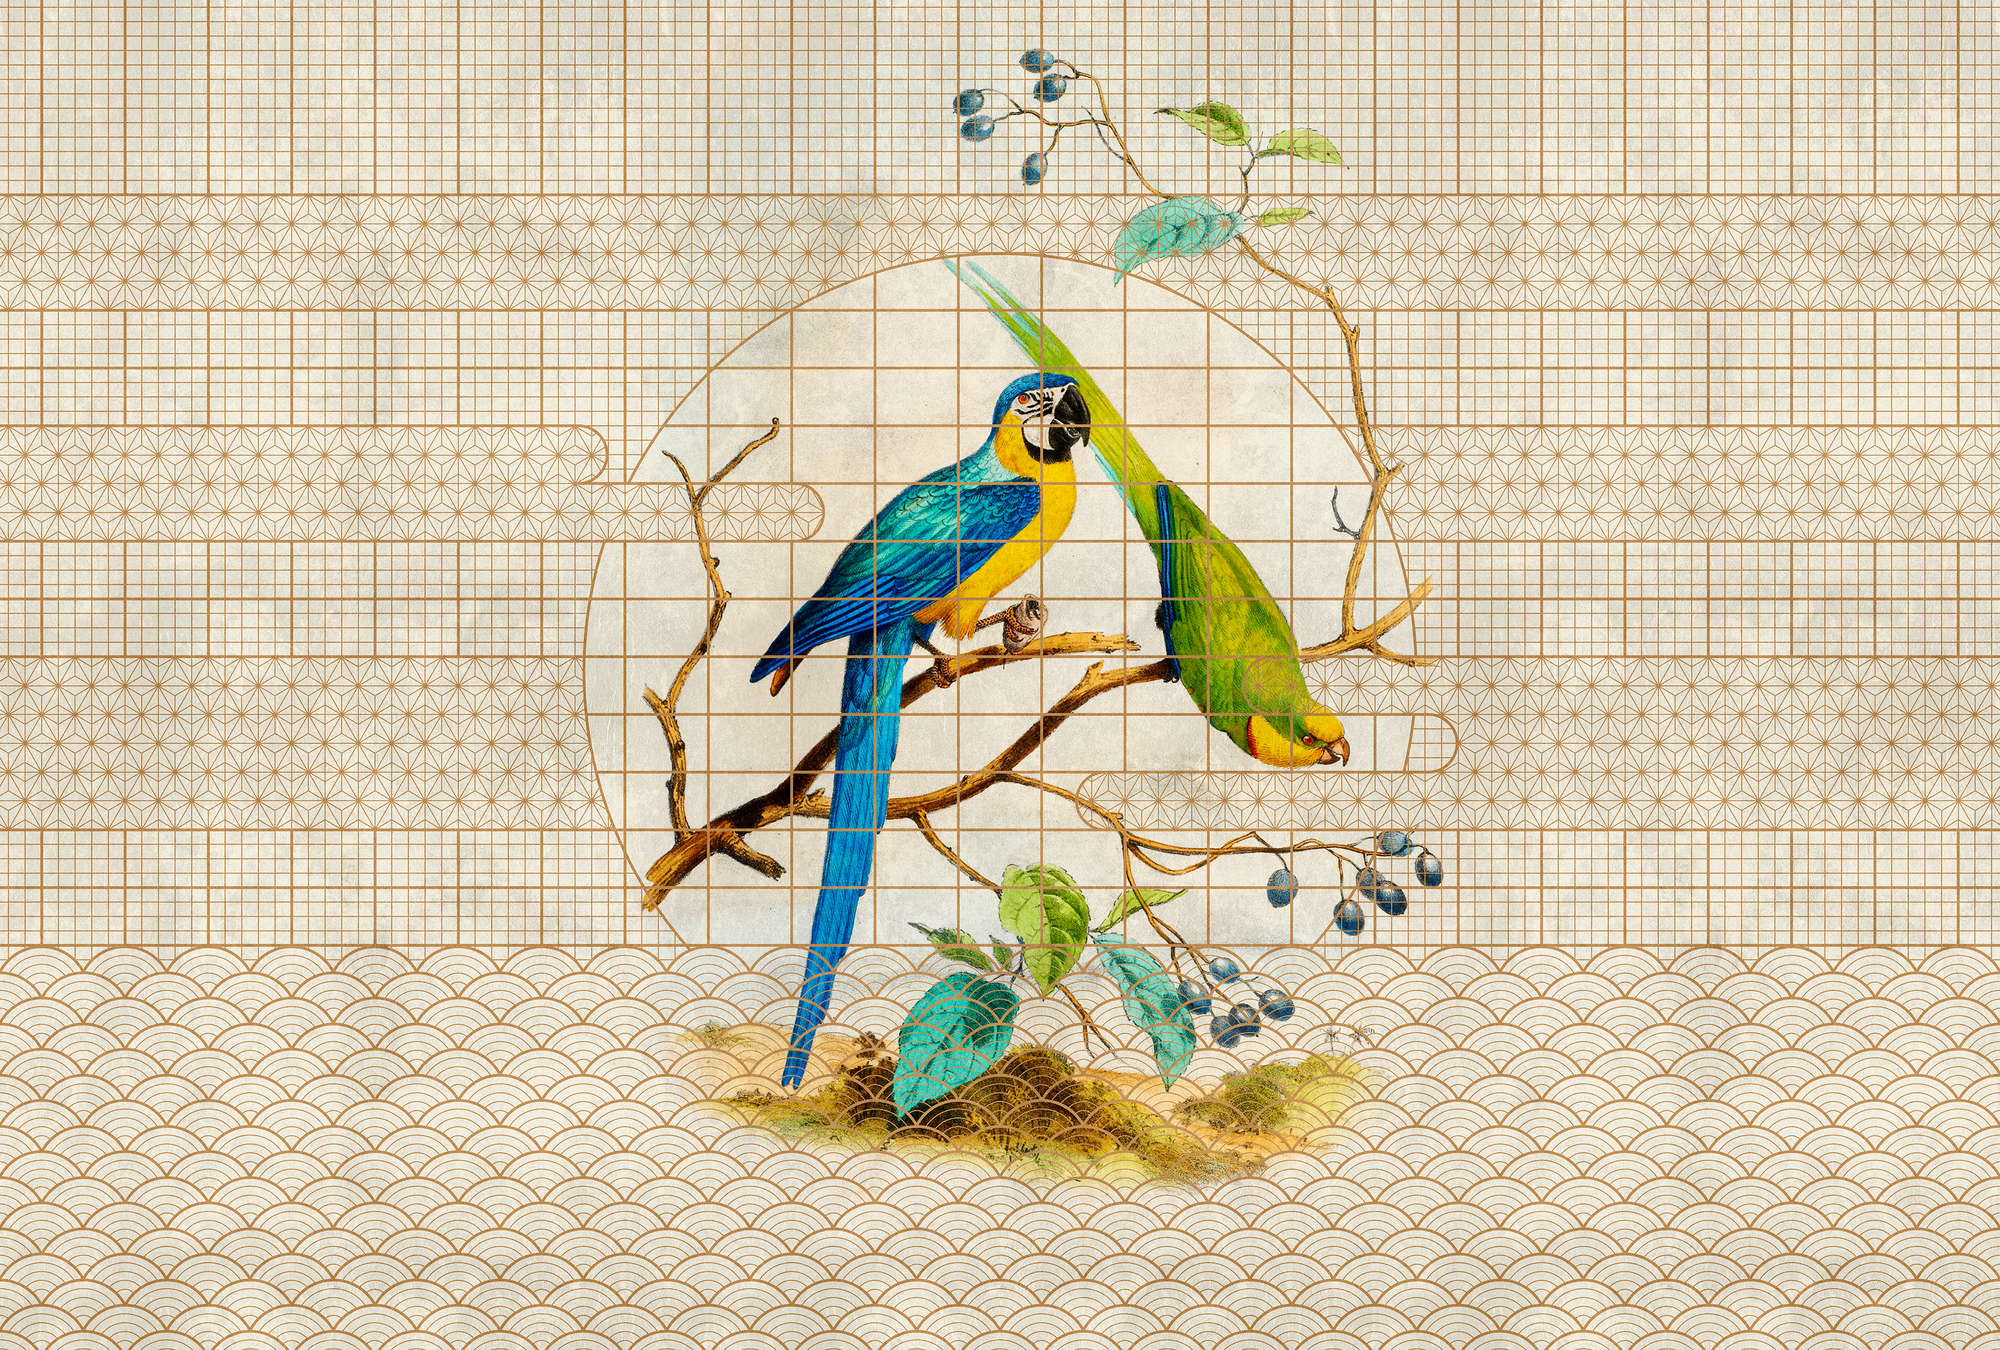             Aviary 3 - Vintage style parrot & golden pattern photo wallpaper
        